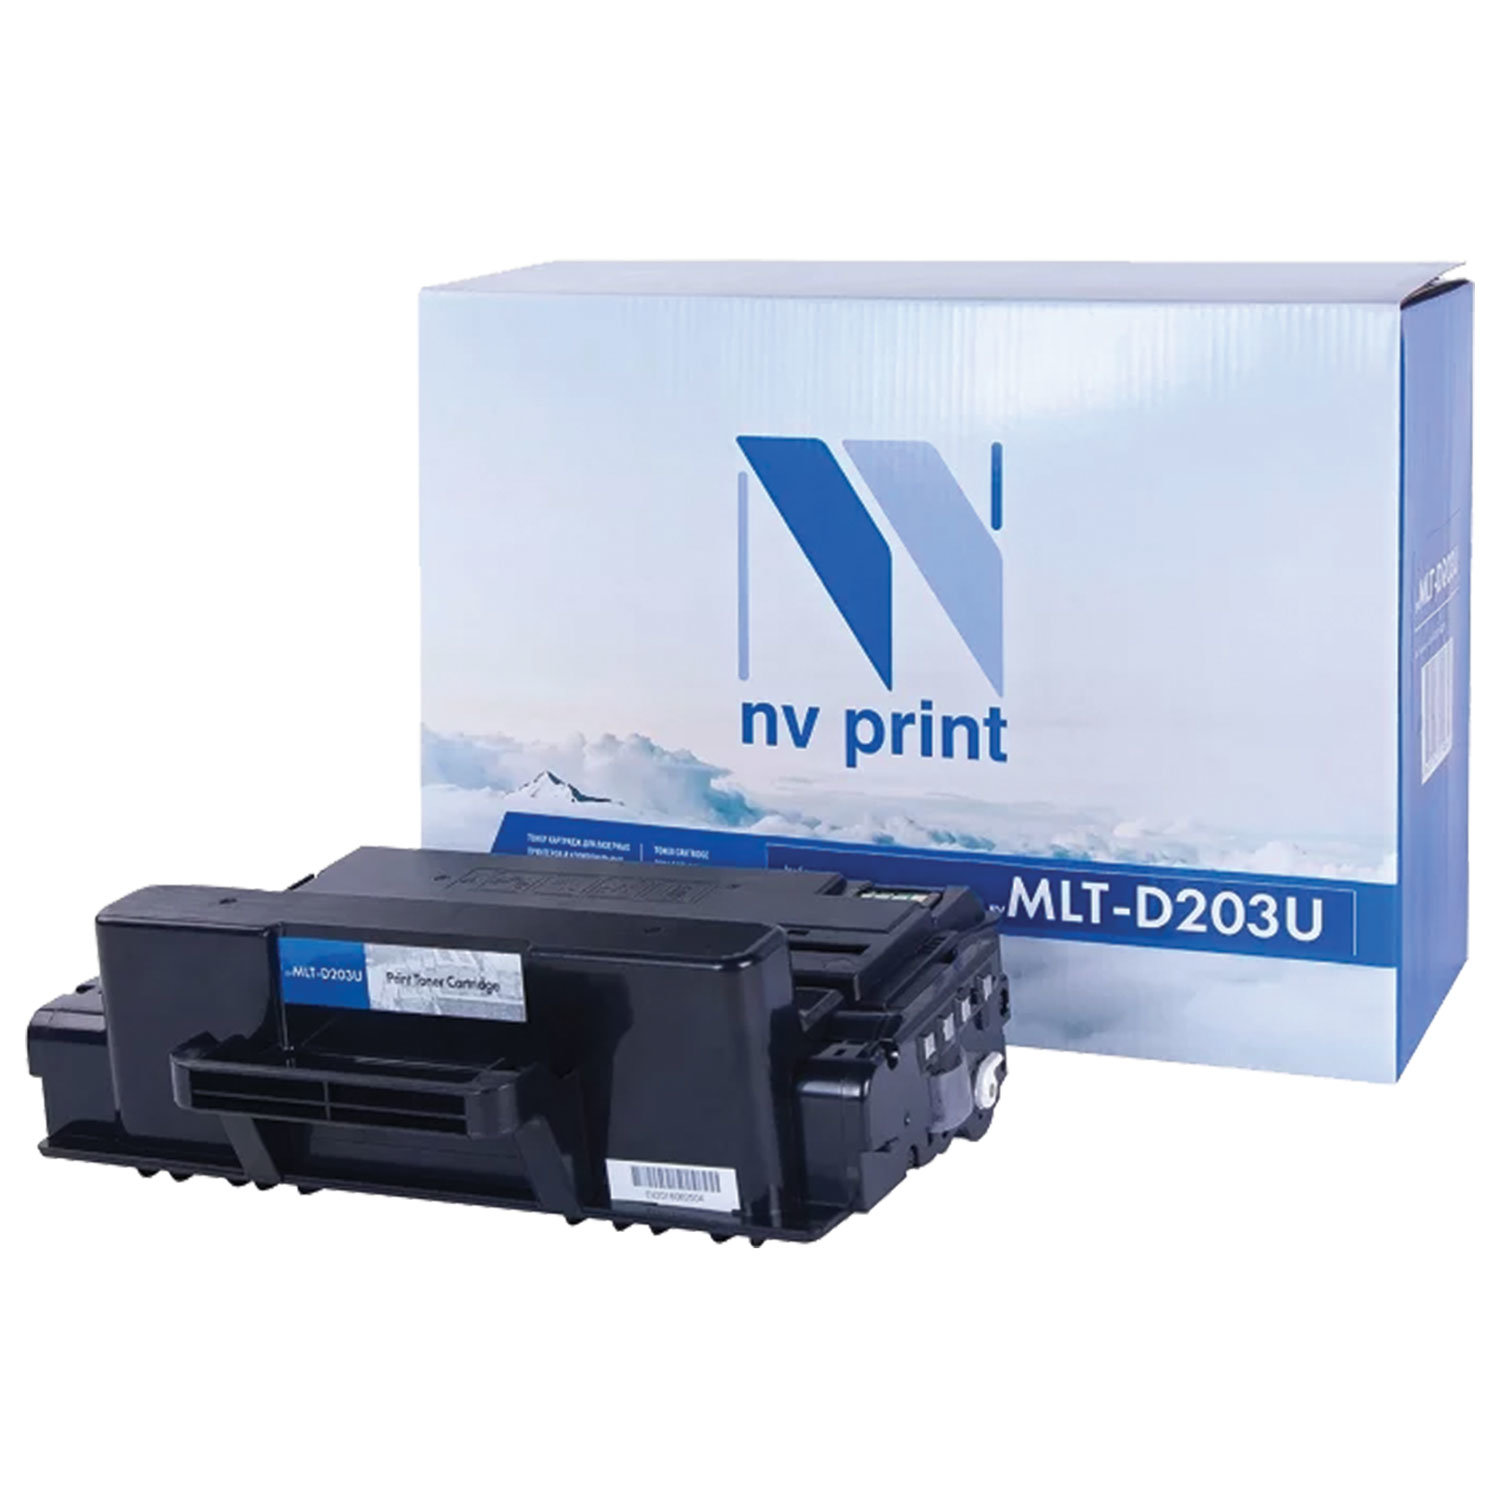  NV PRINT NV-MLTD203U